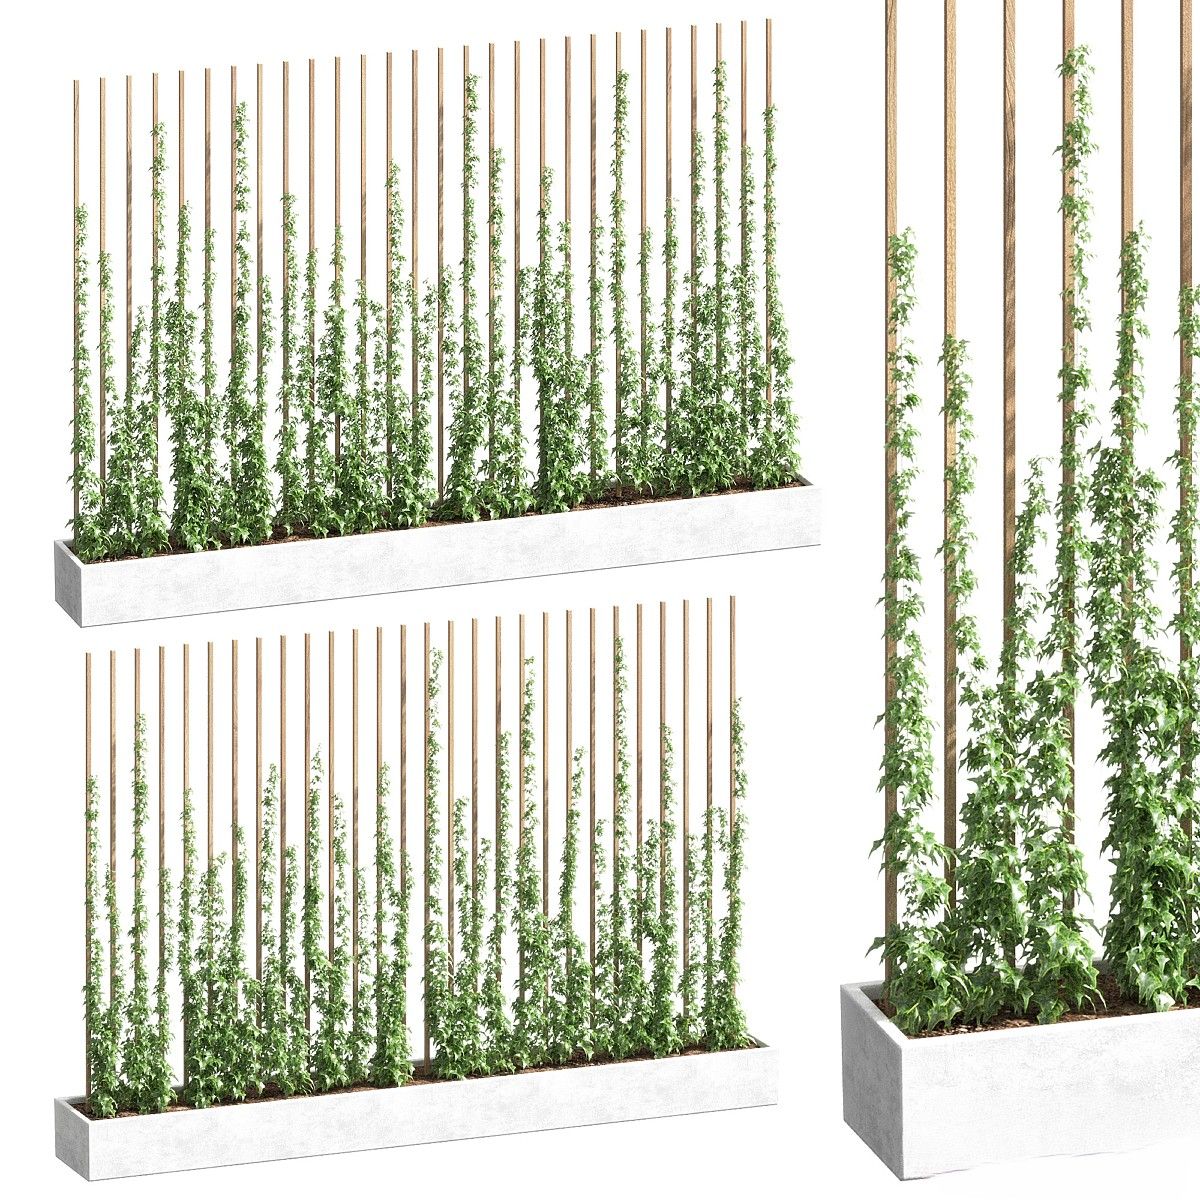 绿植,垂吊和墙面